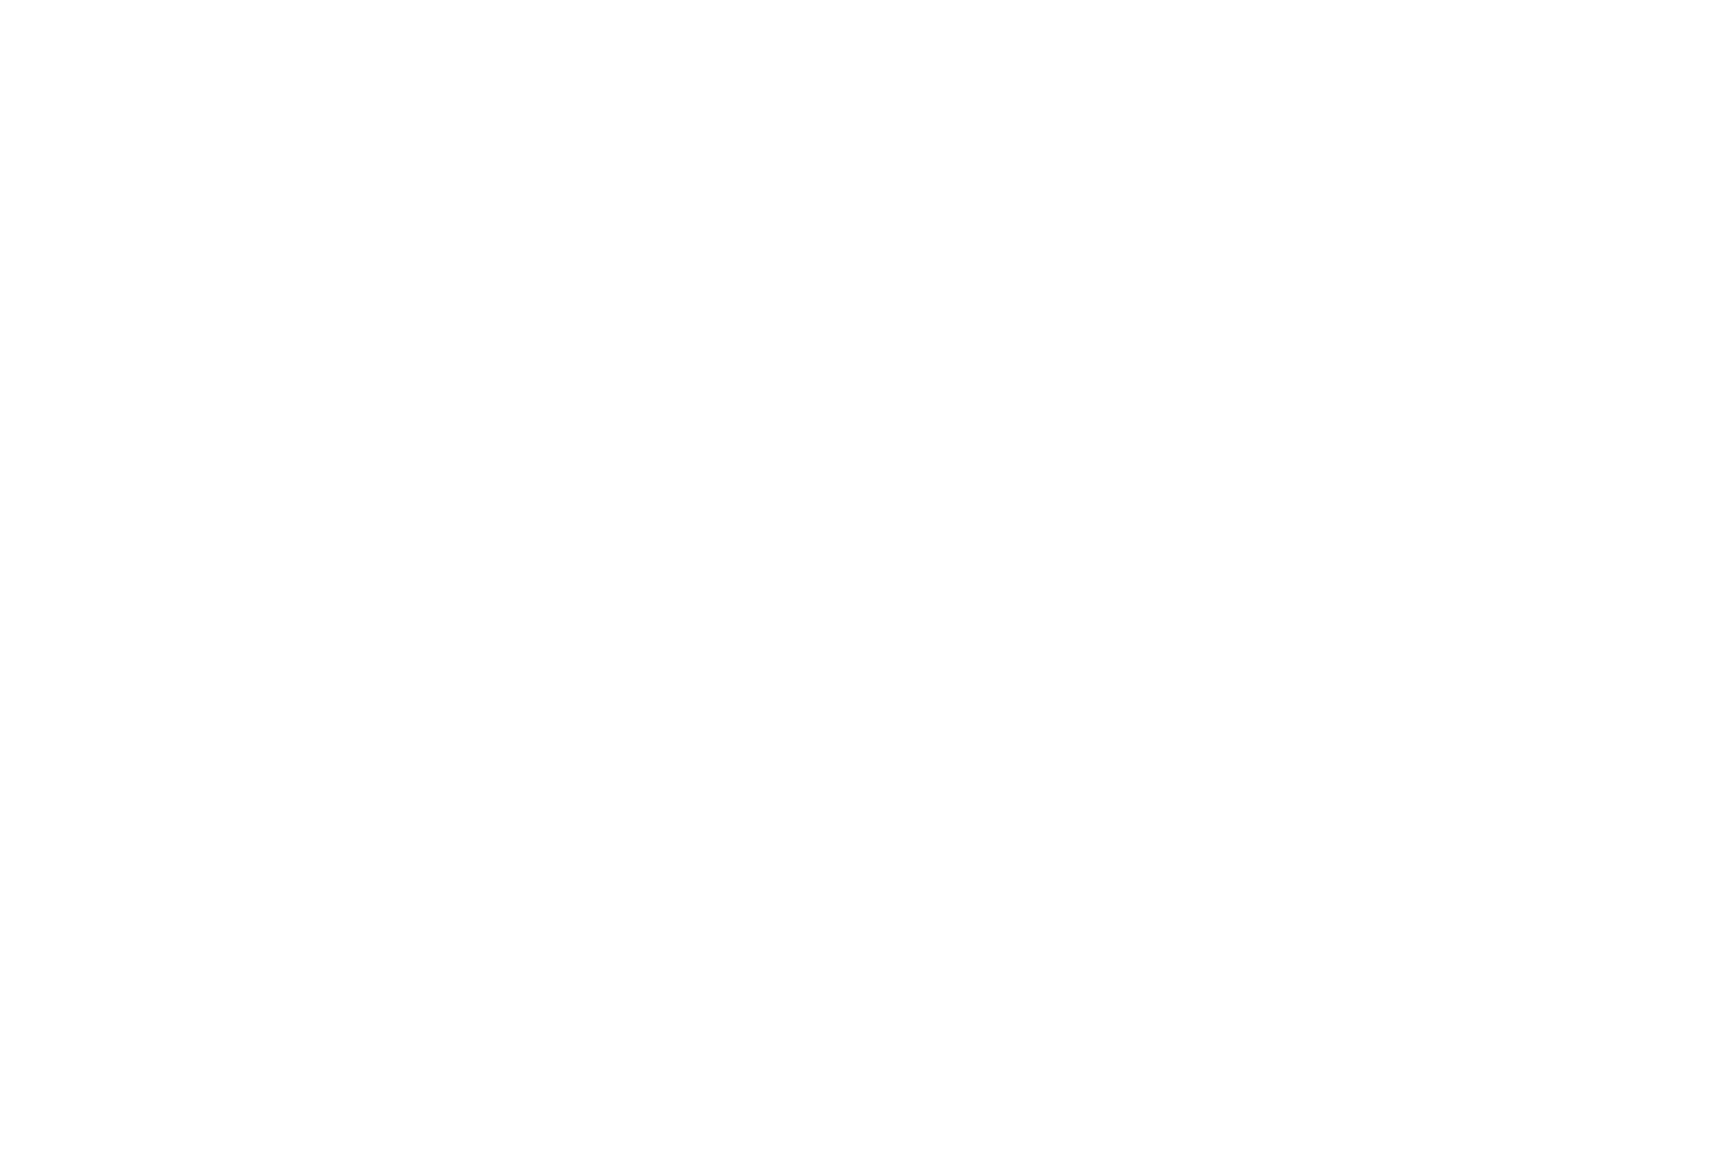 OFFICIAL SELECTION - FILMYSEA INTERNATIONAL FILM FESTIVAL - 2022 (1)